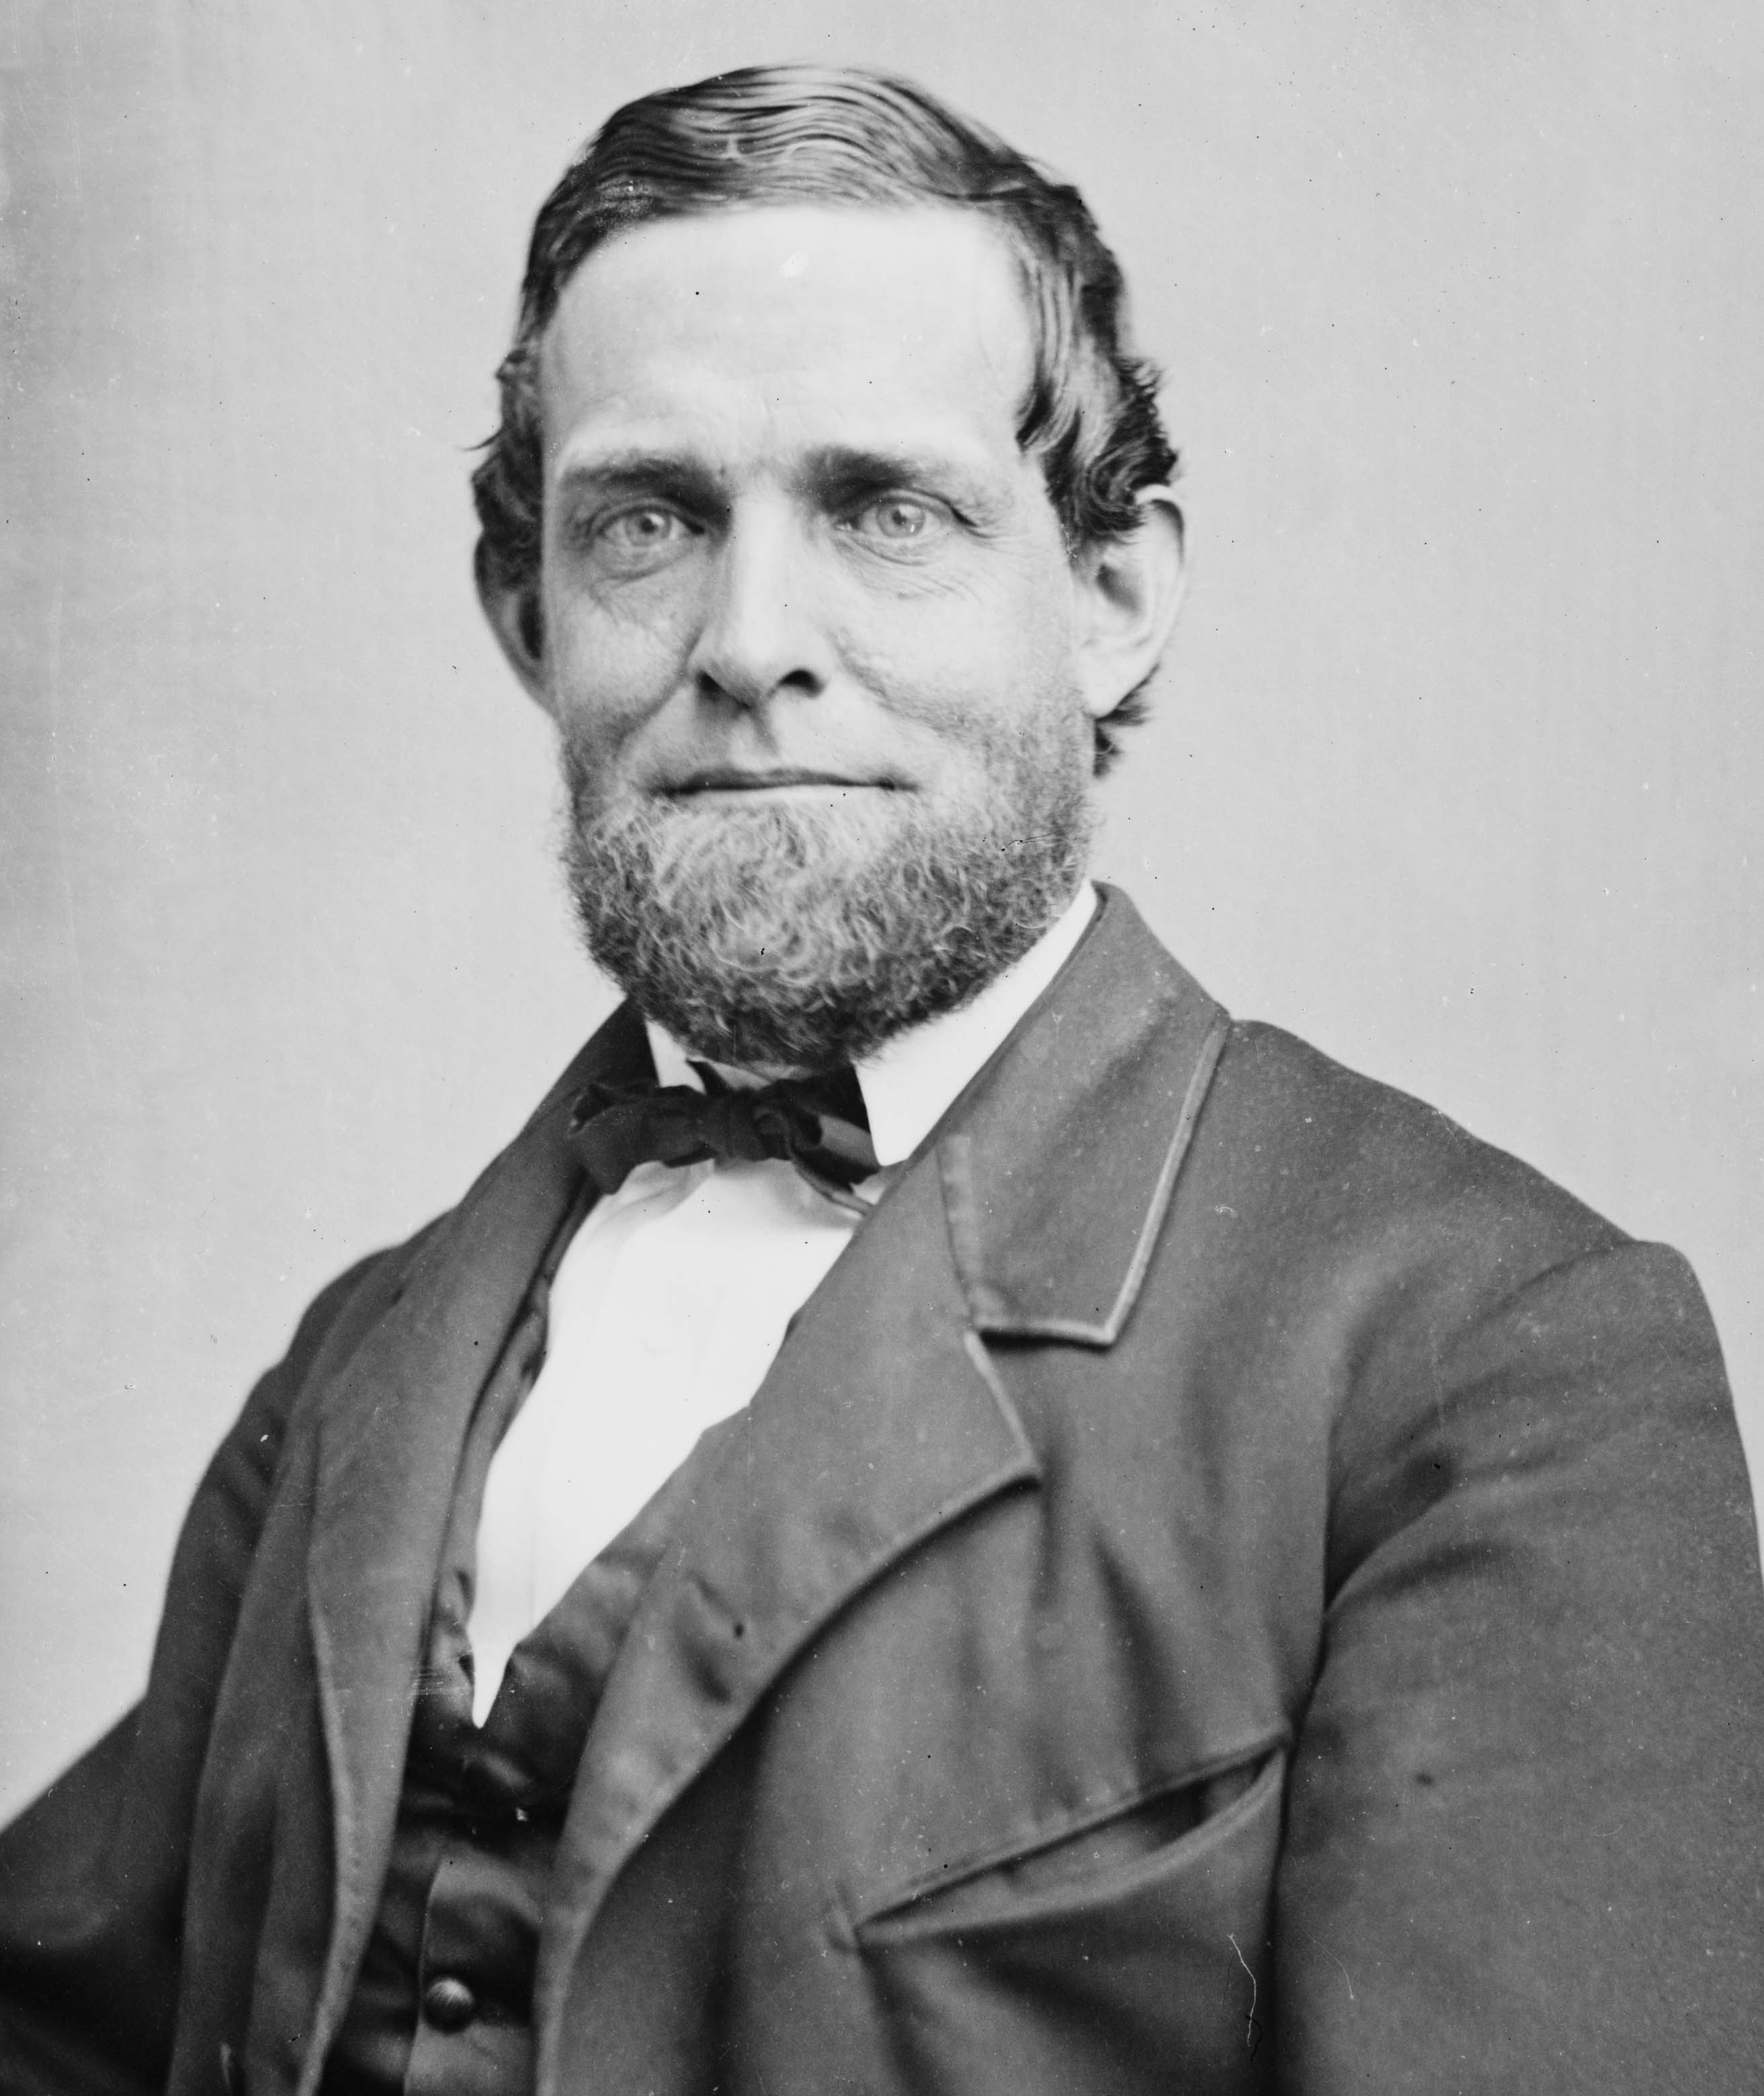 Photograph of Schuyler Colfax